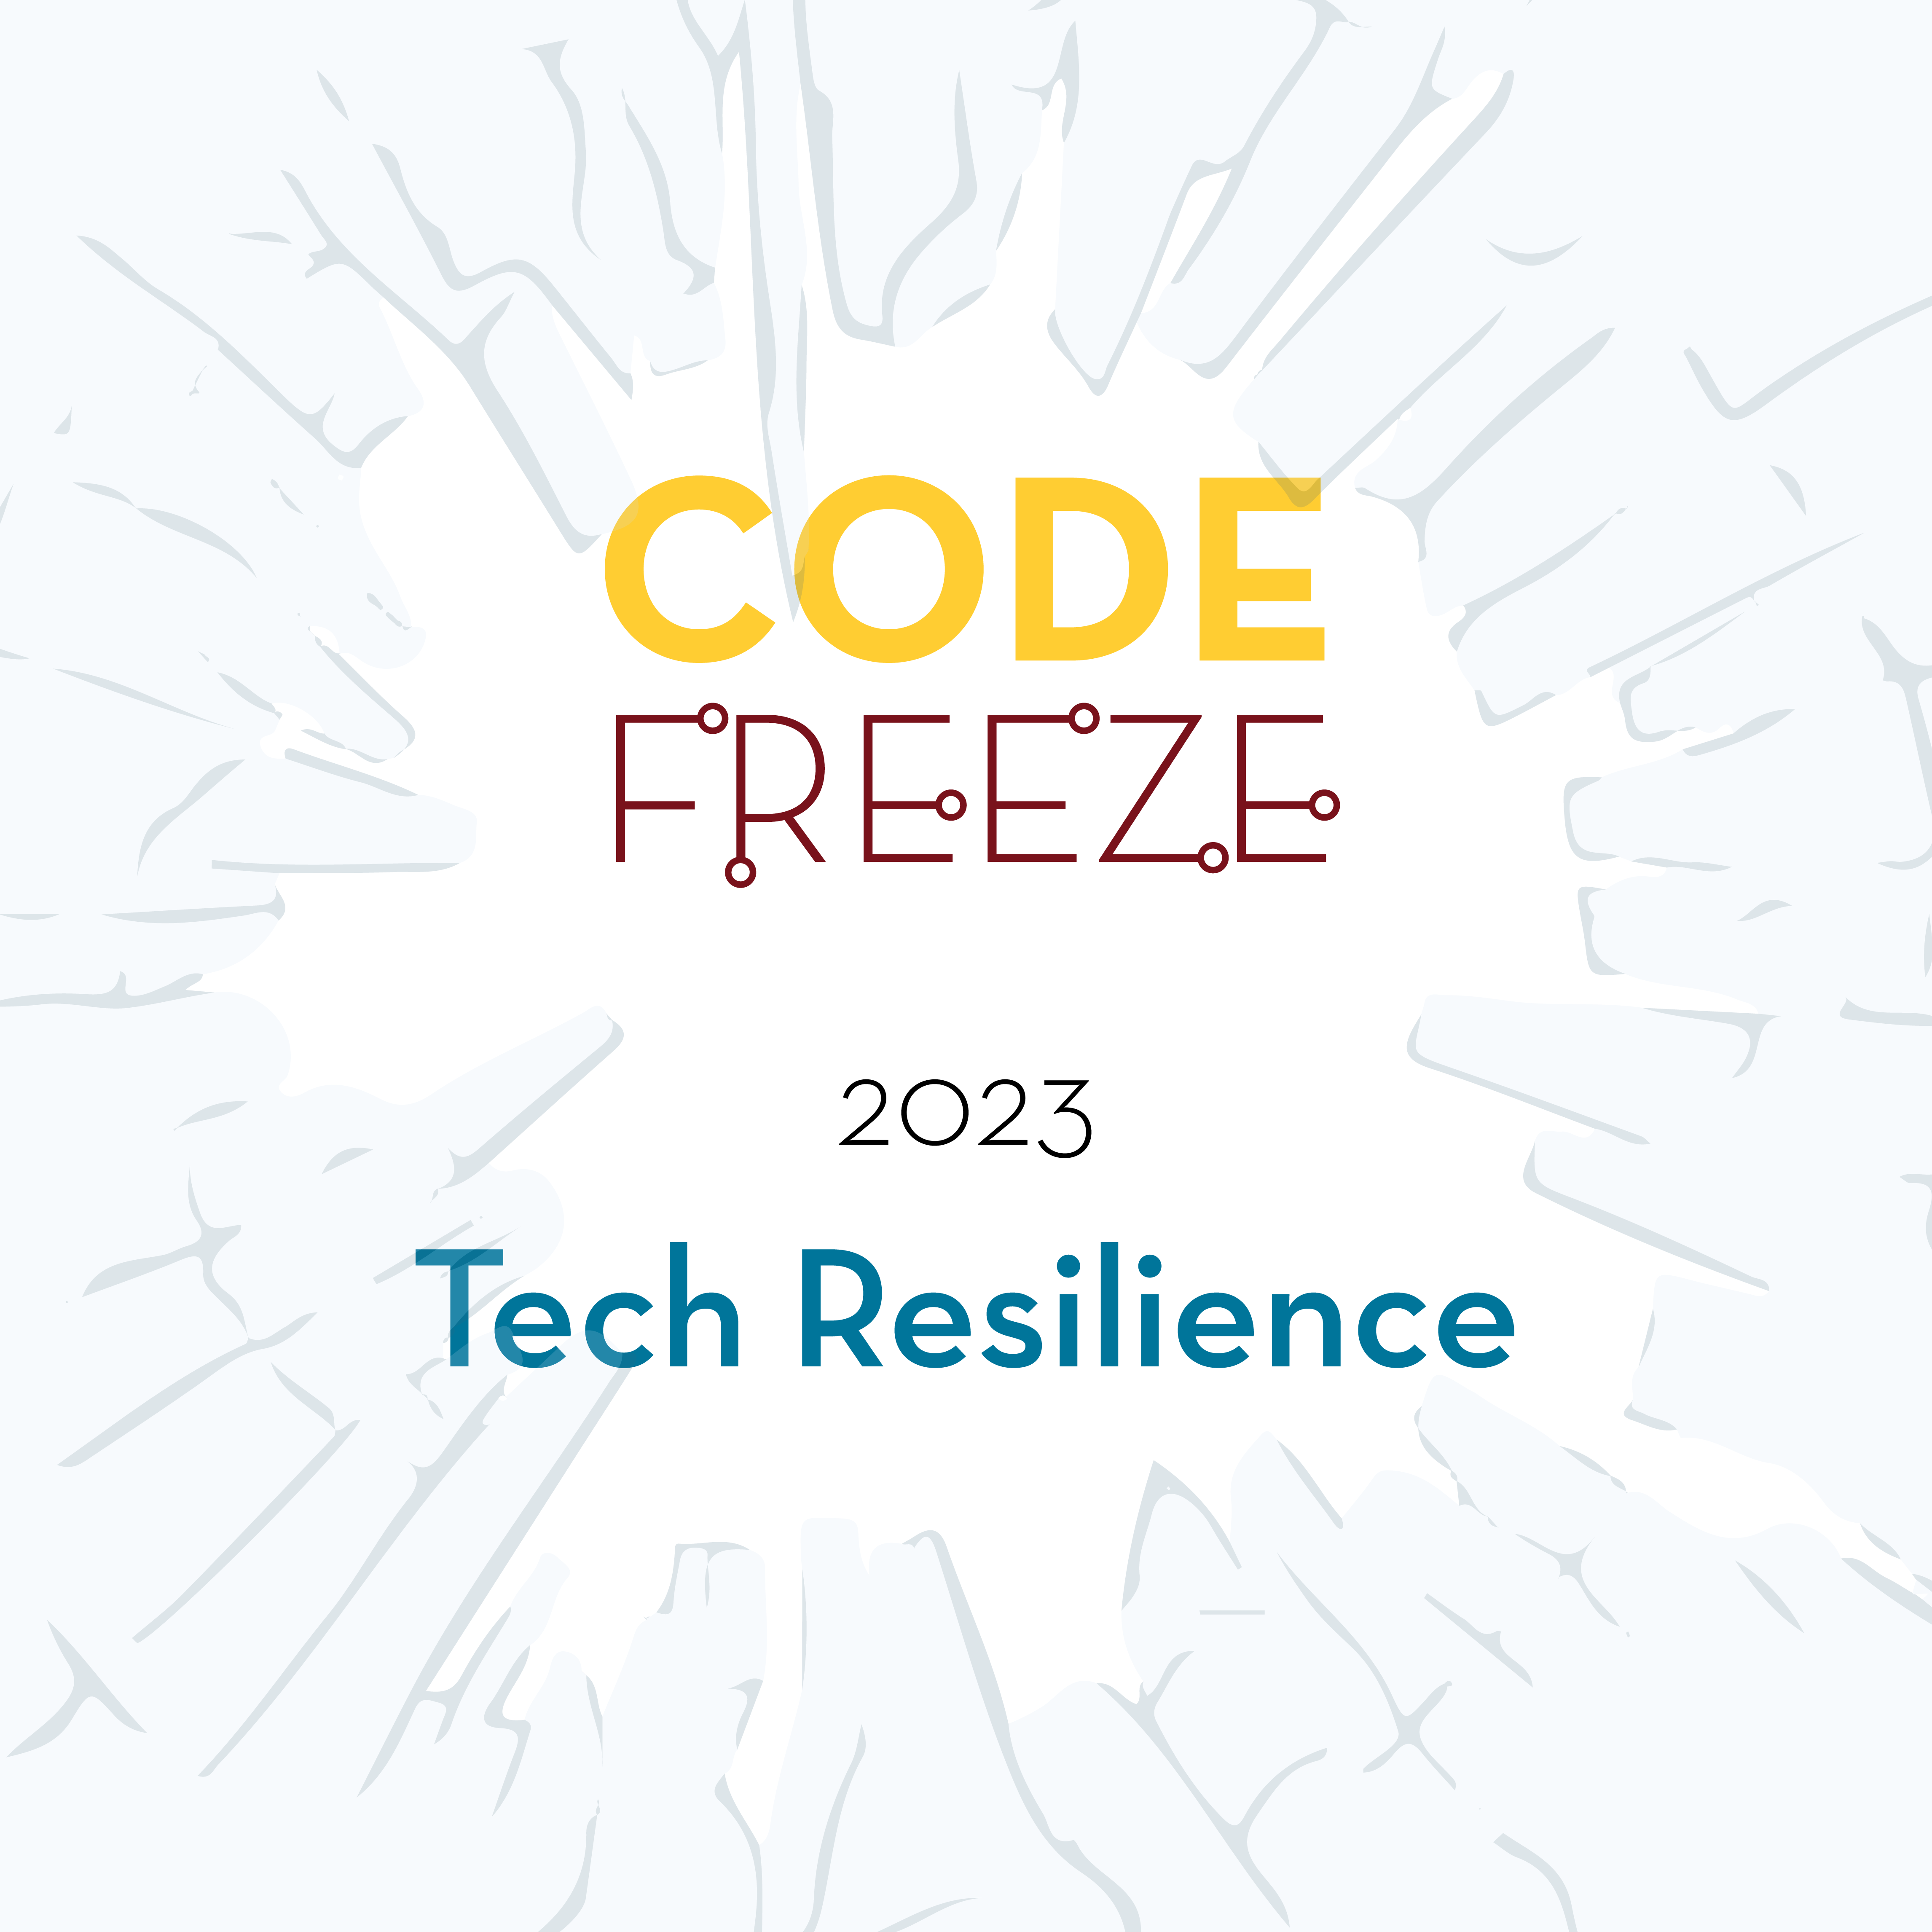 Code Freeze 2023 - Tech Resilience